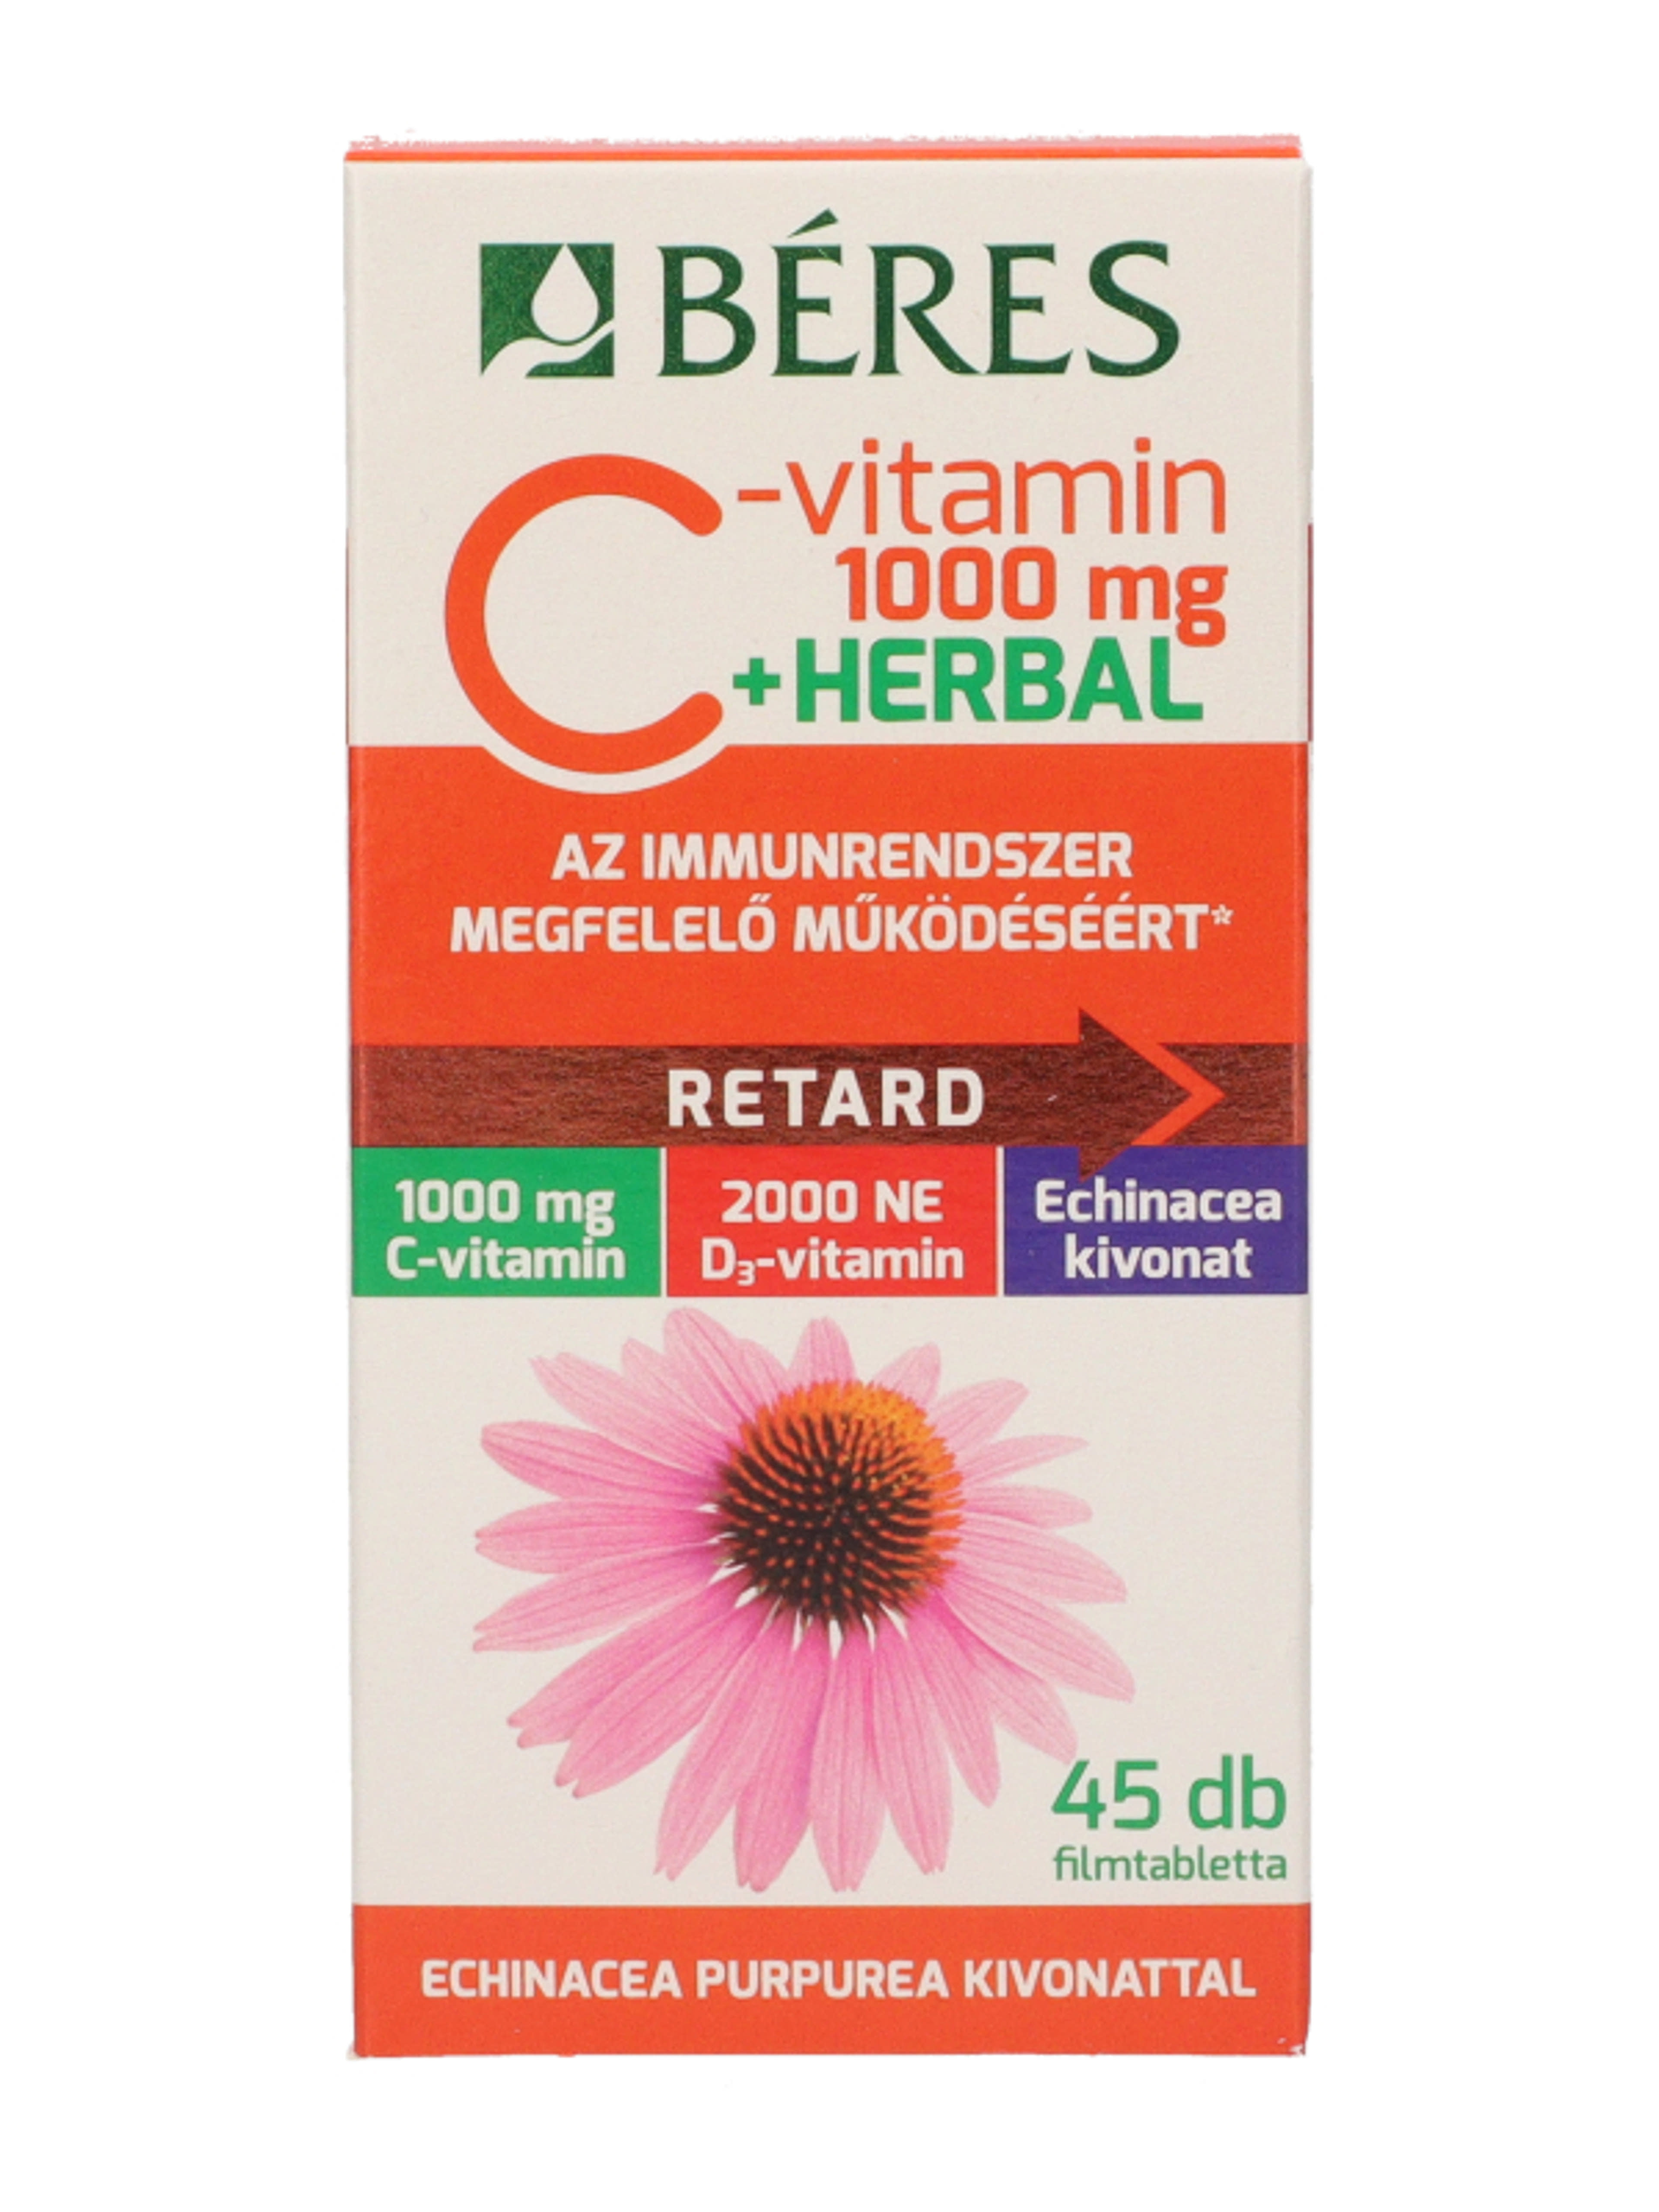 Béres Retard C-vitamin1000 mg +Herbal filmtabletta - 45 db